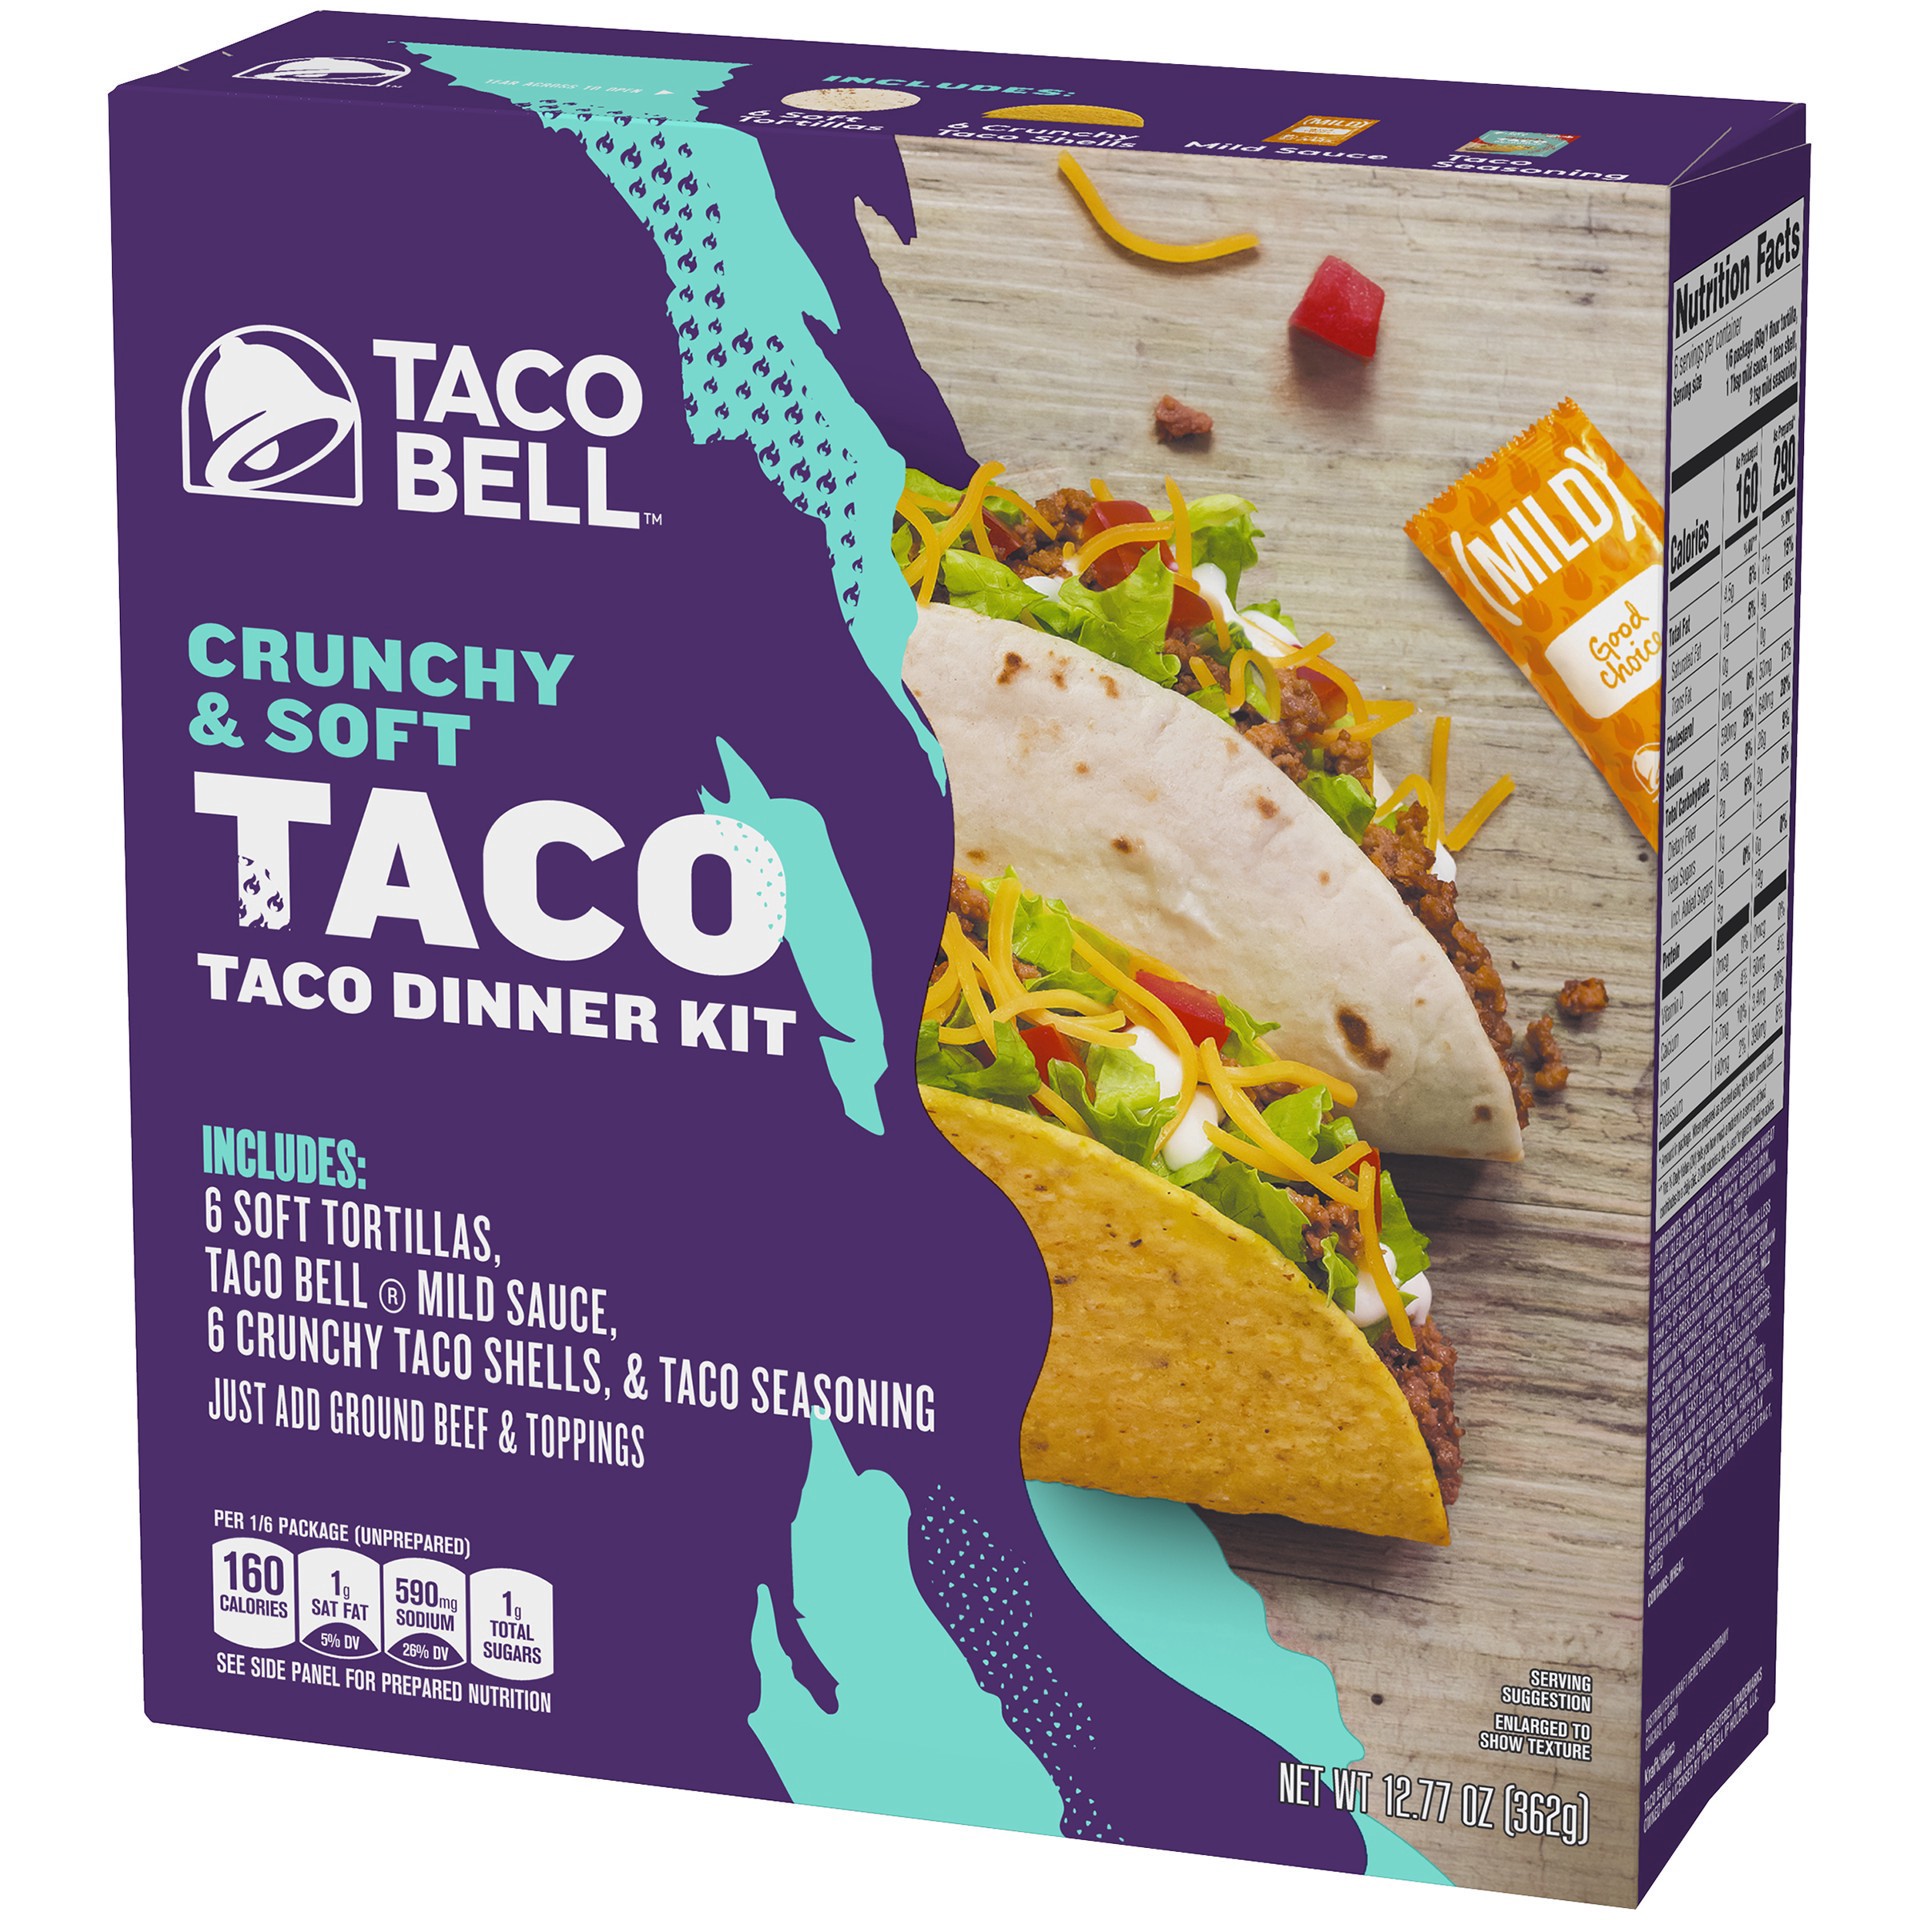 slide 76 of 101, Taco Bell Crunchy & Soft Taco Cravings Kit with 6 Soft Tortillas, 6 Crunchy Taco Shells, Taco Bell Mild Sauce & Seasoning, 12.77 oz Box, 1 ct